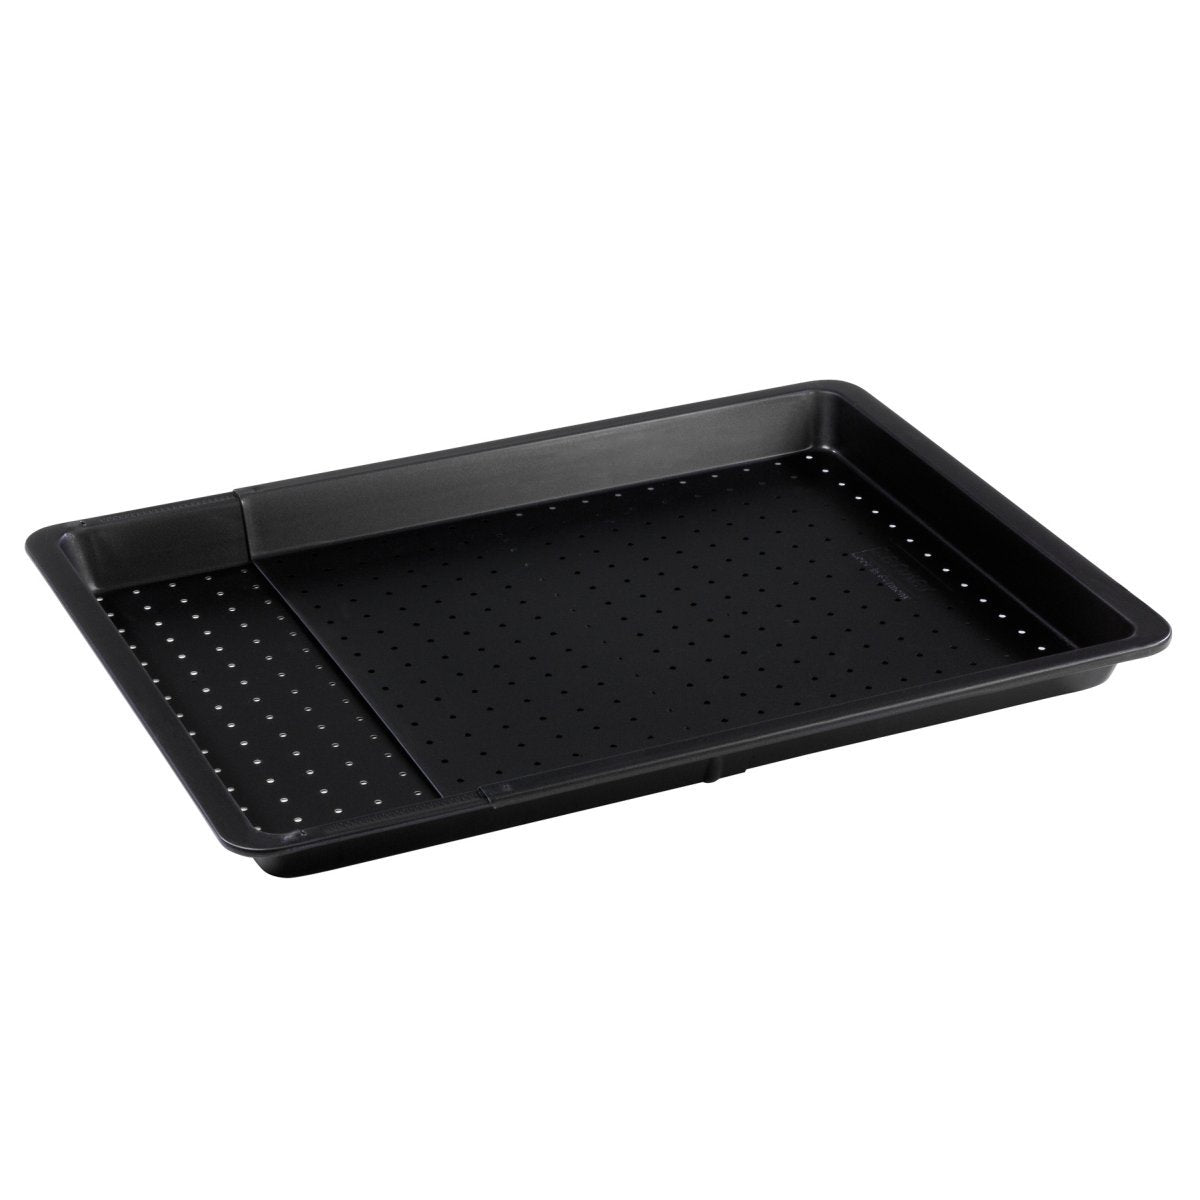 Zenker "Black Metallic" Perforated baking tray, steel with anti-adhesive coating